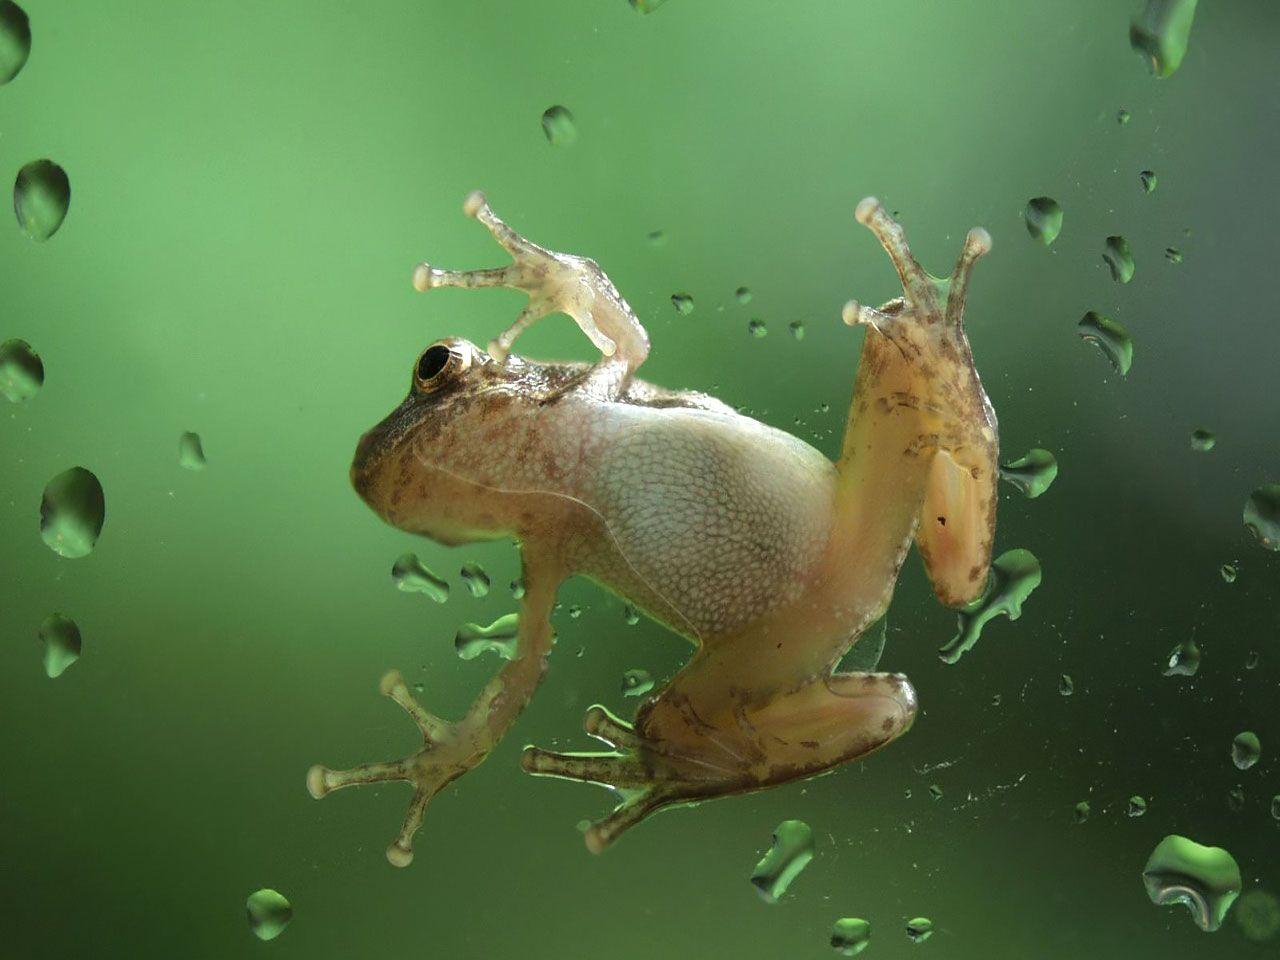 glass frog wallpaper